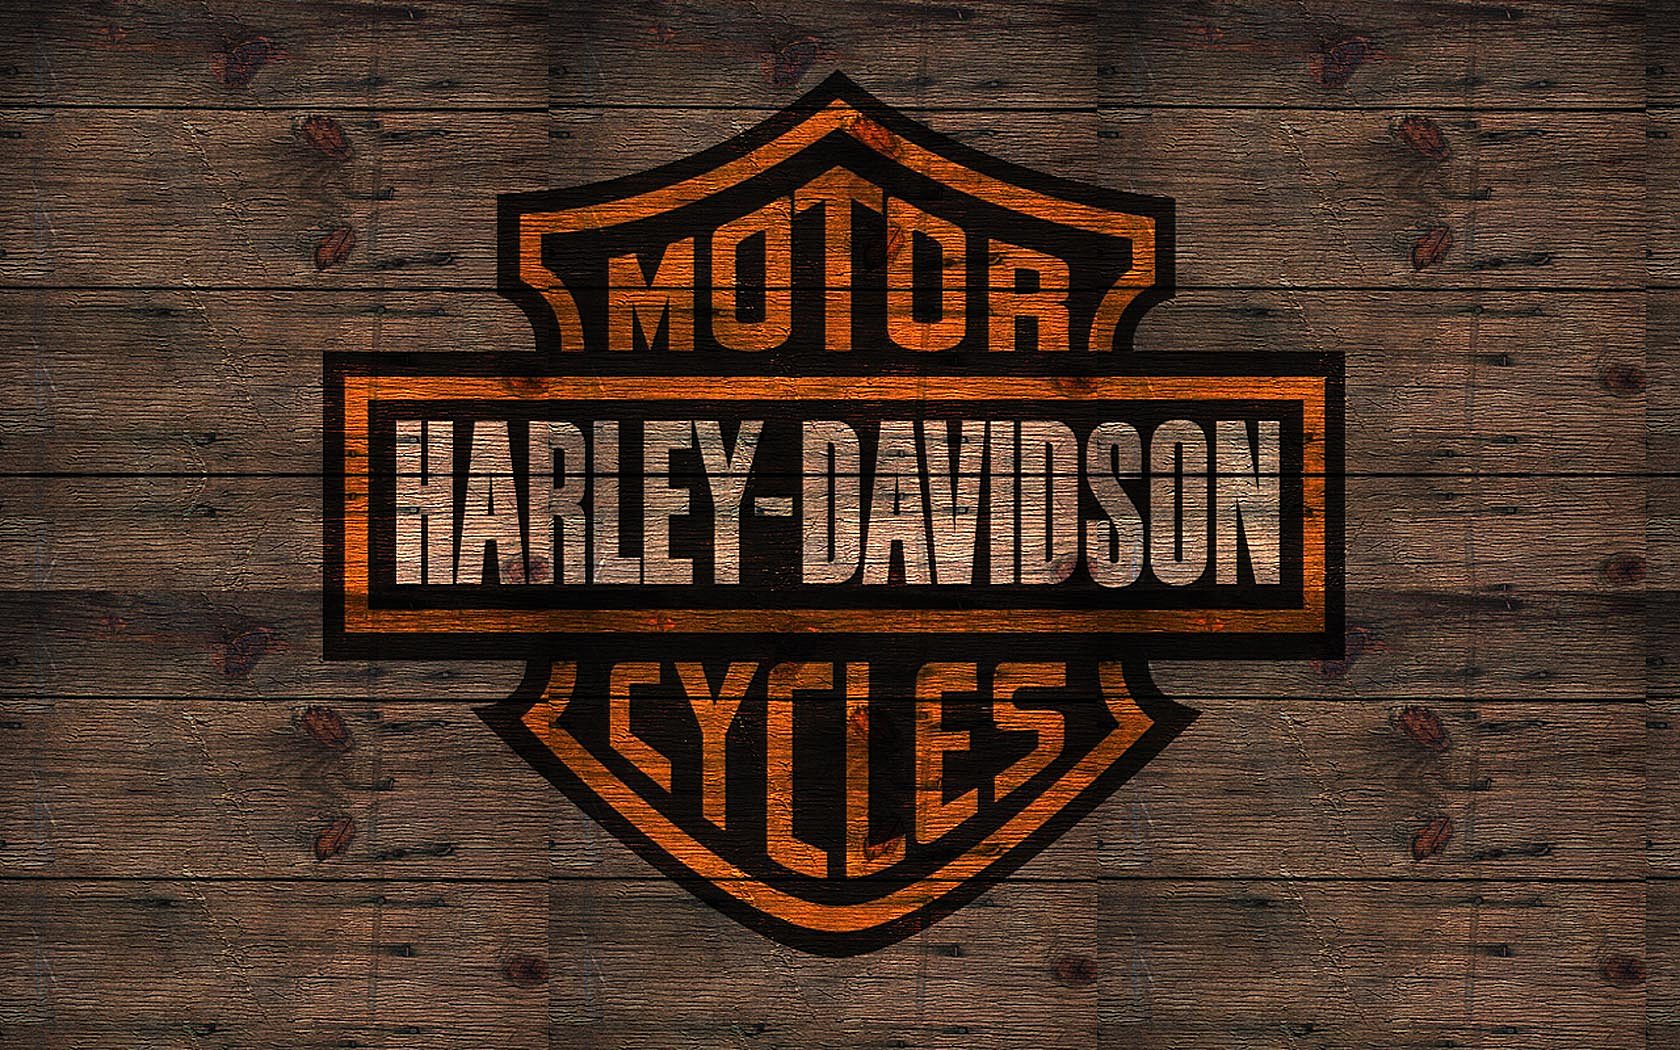 Harley Davidson Wallpaper Screensaver Super